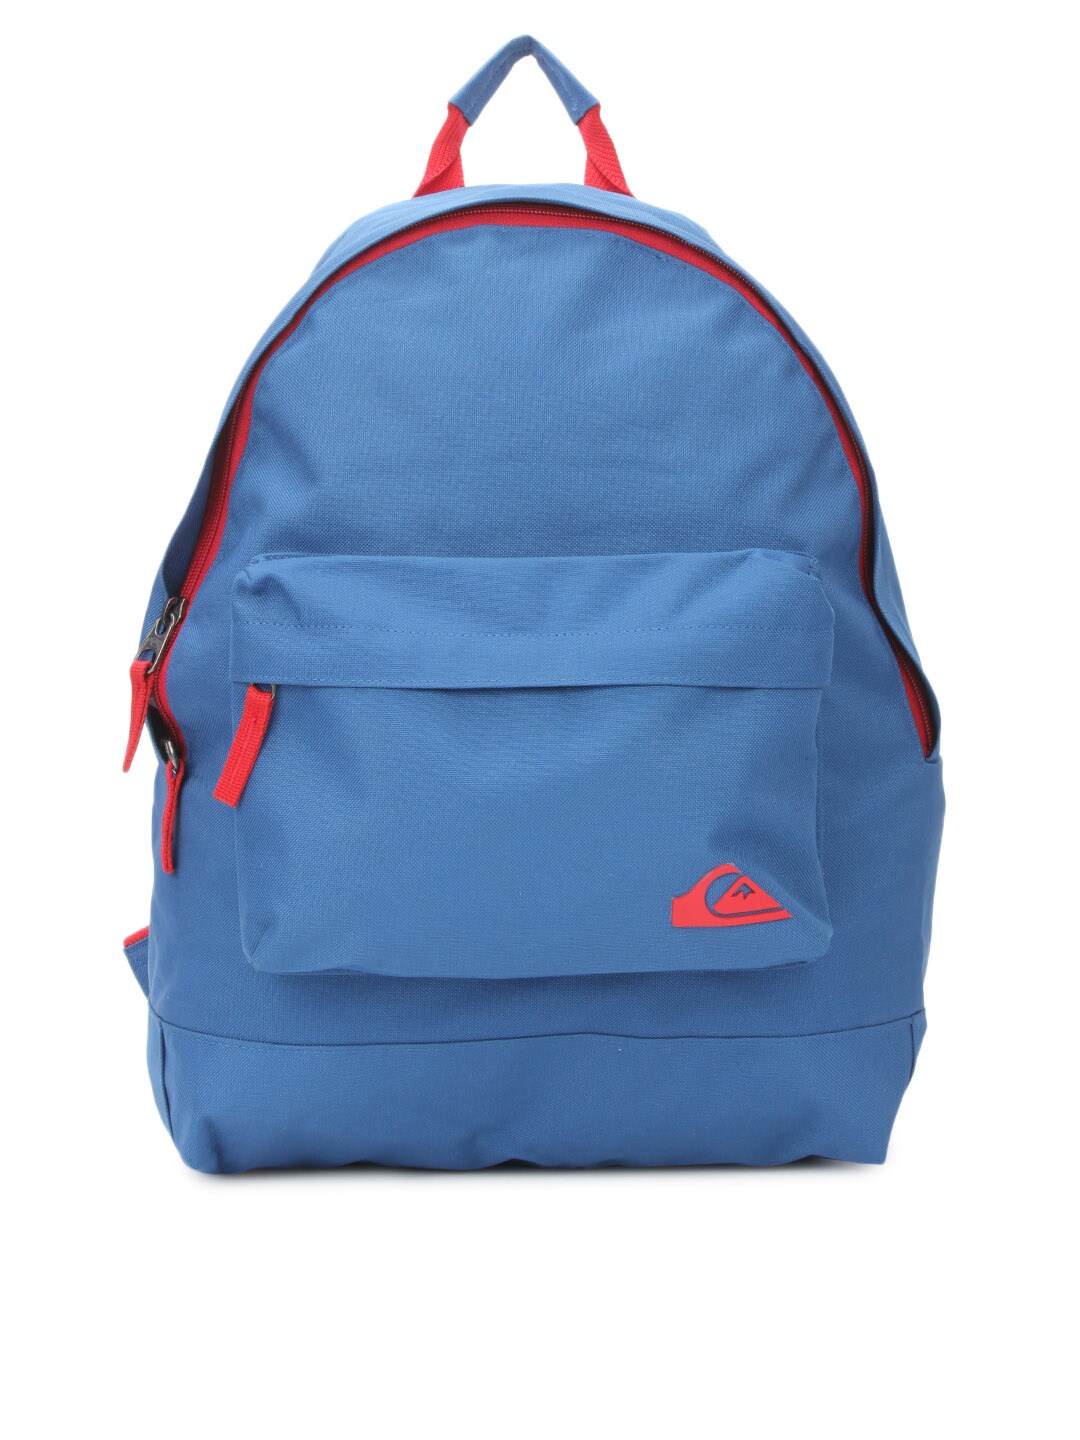 Quiksilver Unisex Blue Backpack